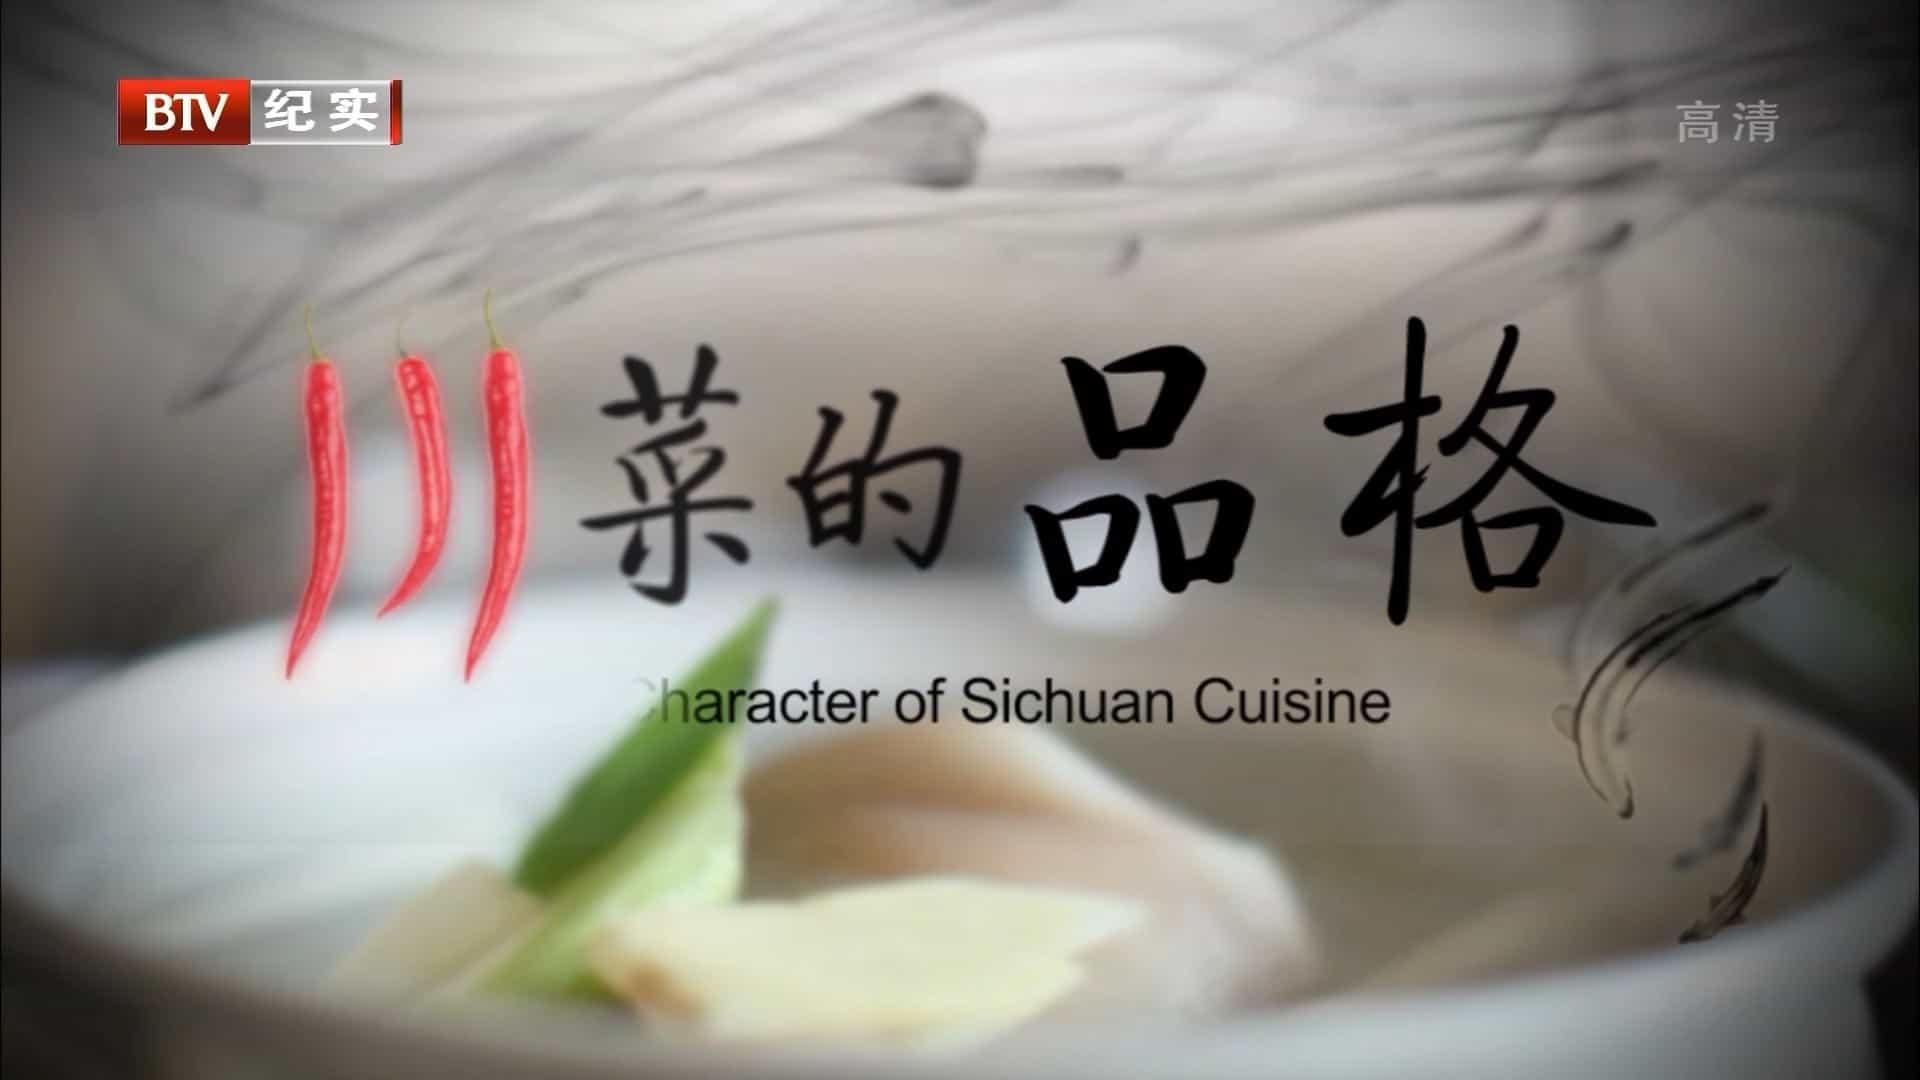 BTV美食纪录片/中国美食系列《川菜的品格 The Character of Sichuan Cuisine》全6集 国语内嵌中字 1080i高清下载